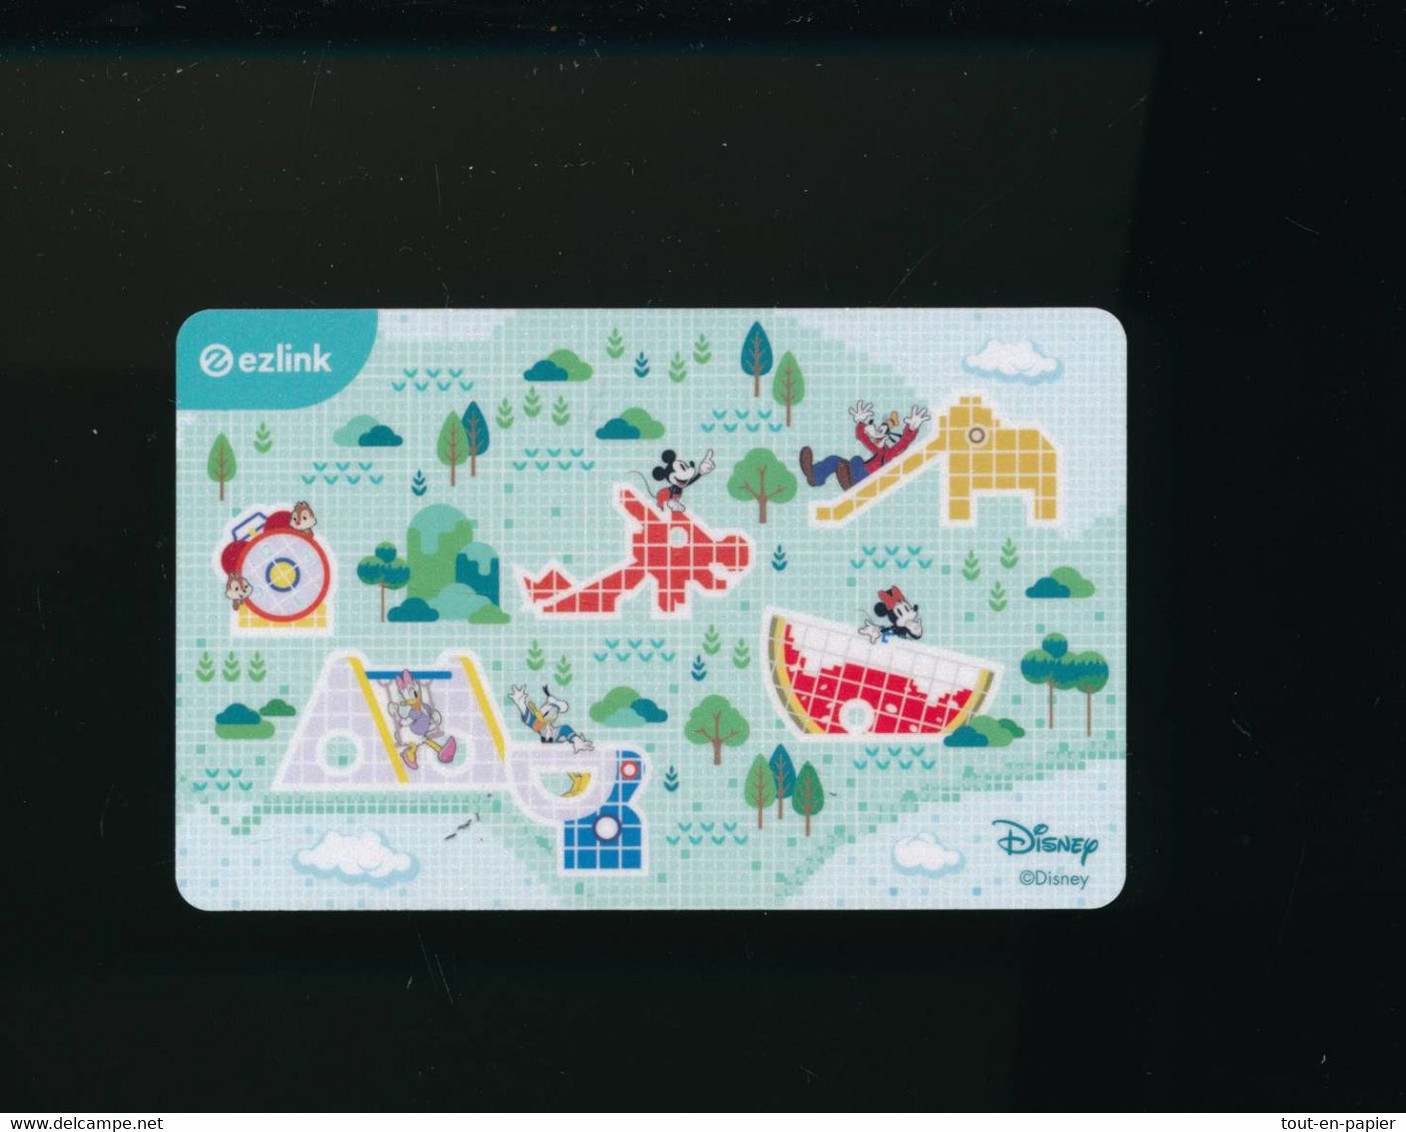 Singapore Travel Transport Card Subway Train Bus Ticket Ezlink Used Disney Characters - World